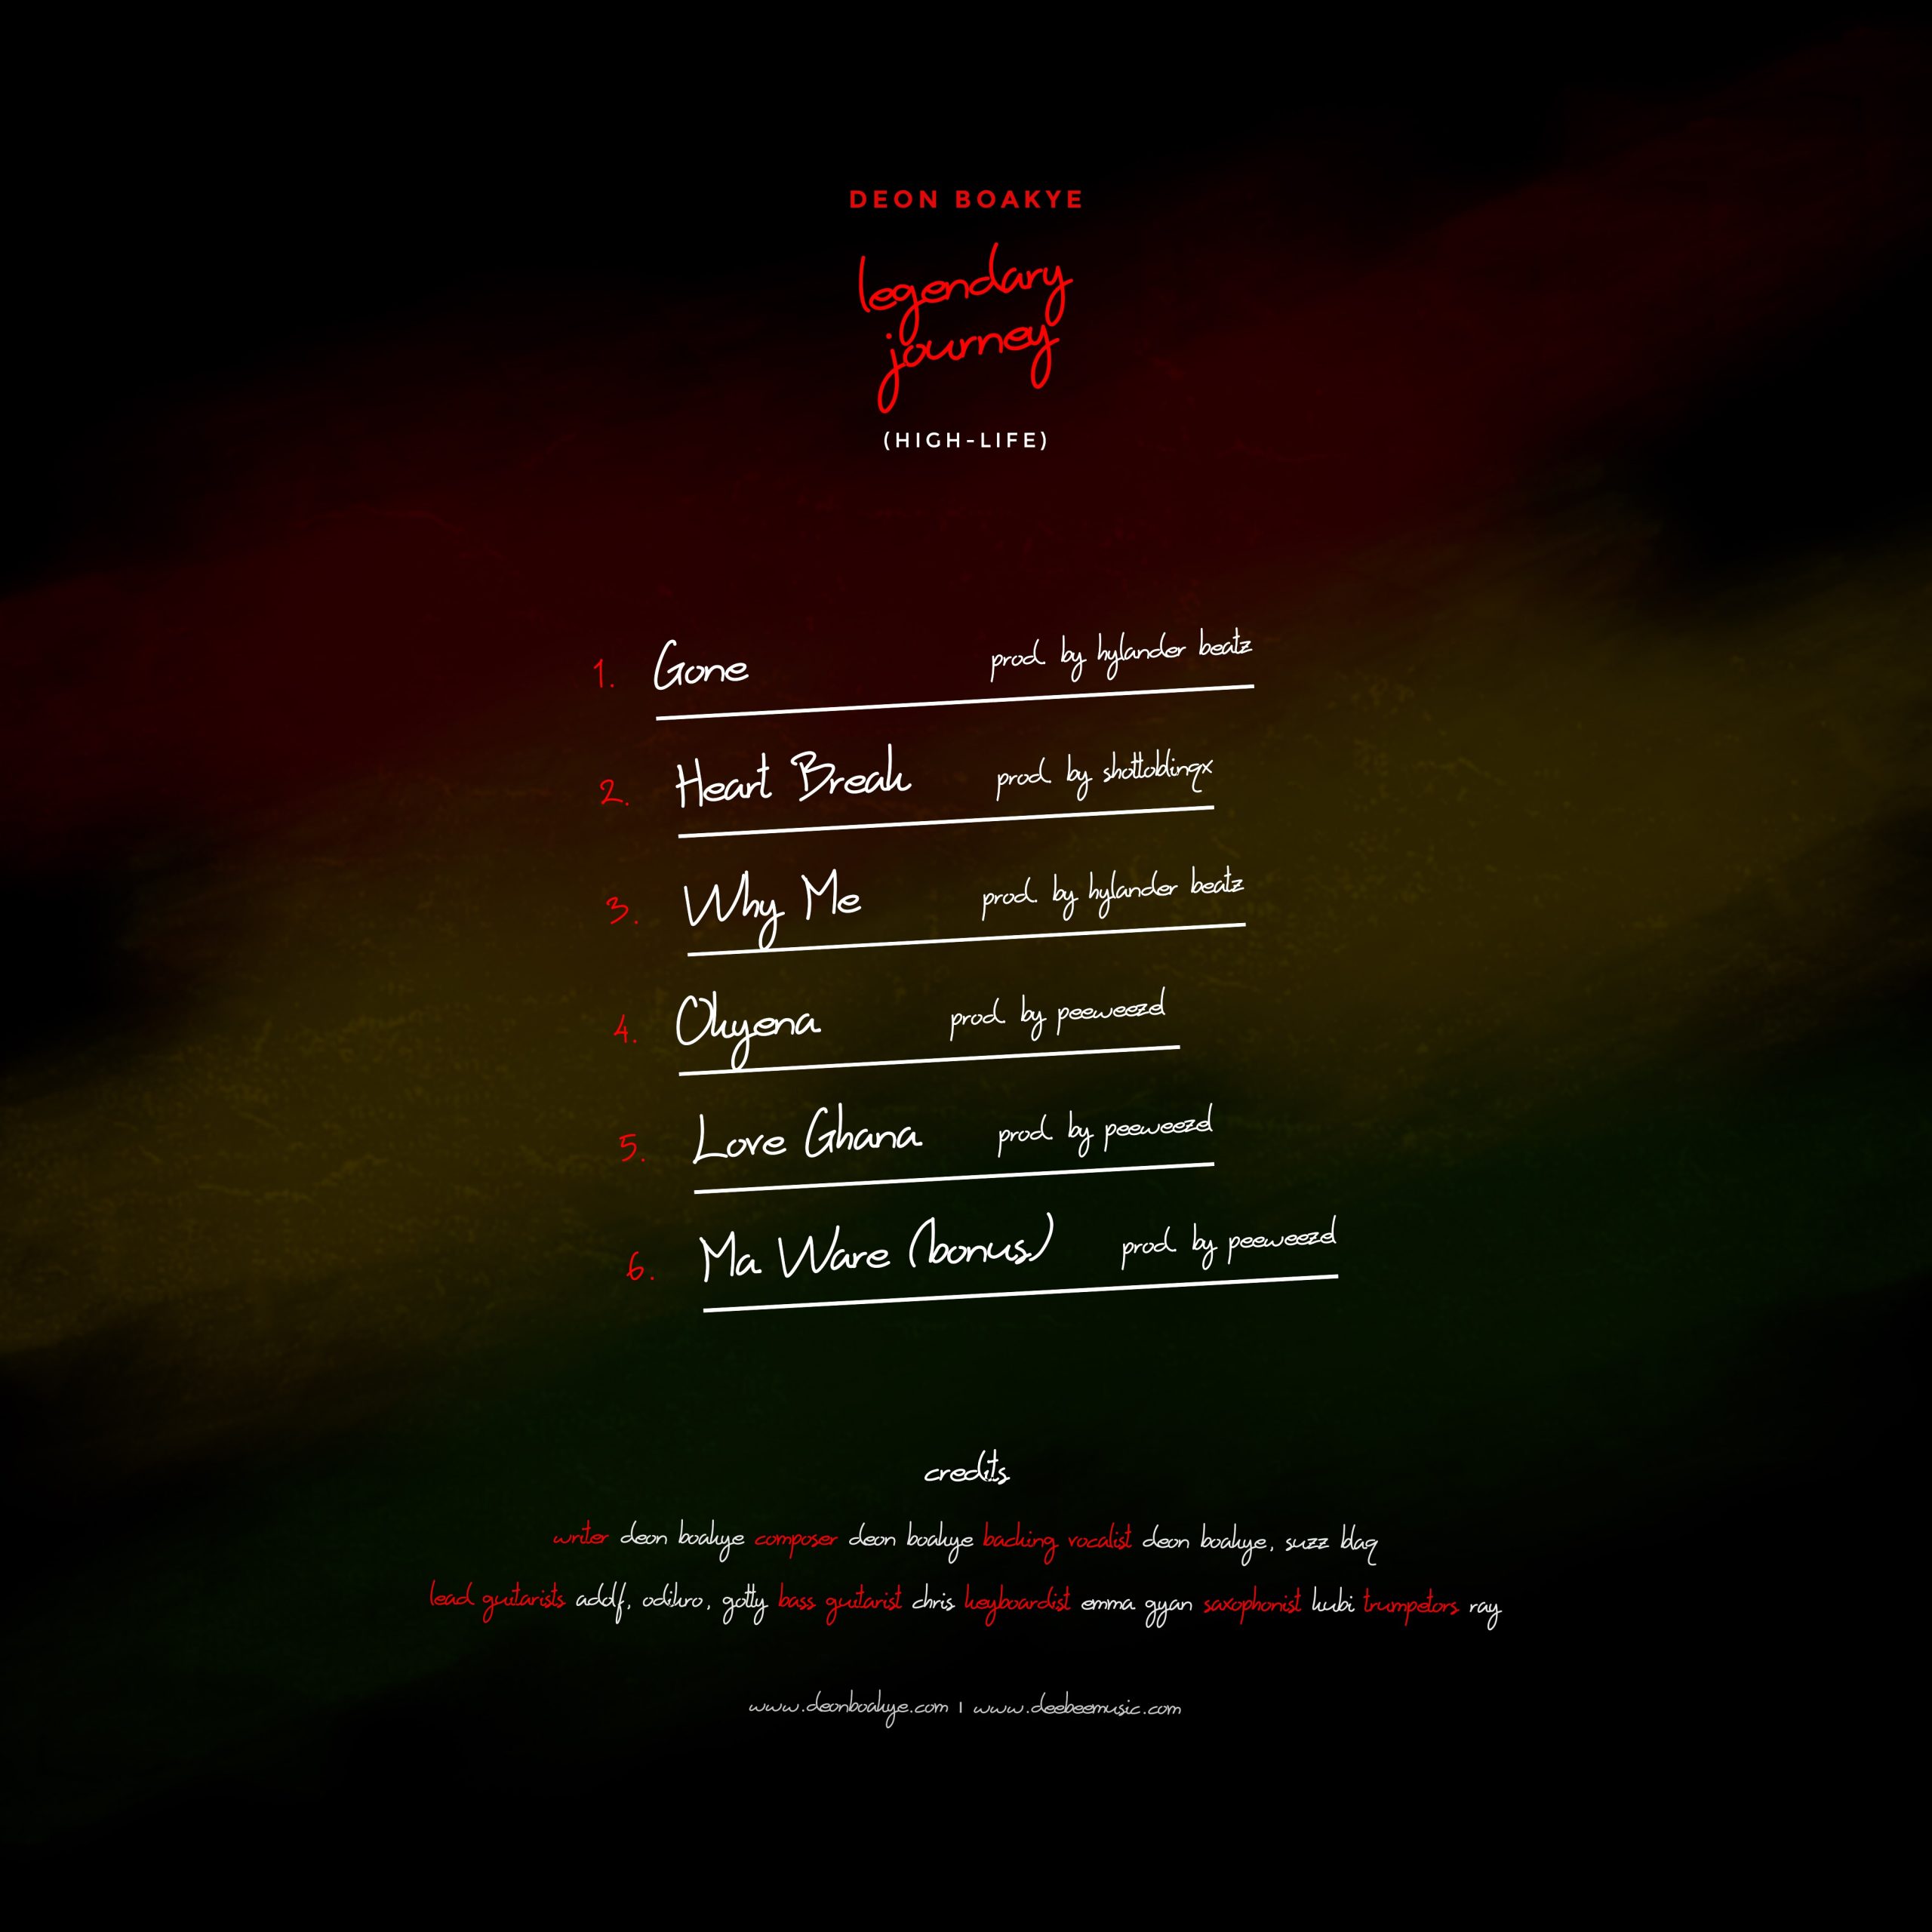 Deon Boakye's “Legendary Journey” EP cover